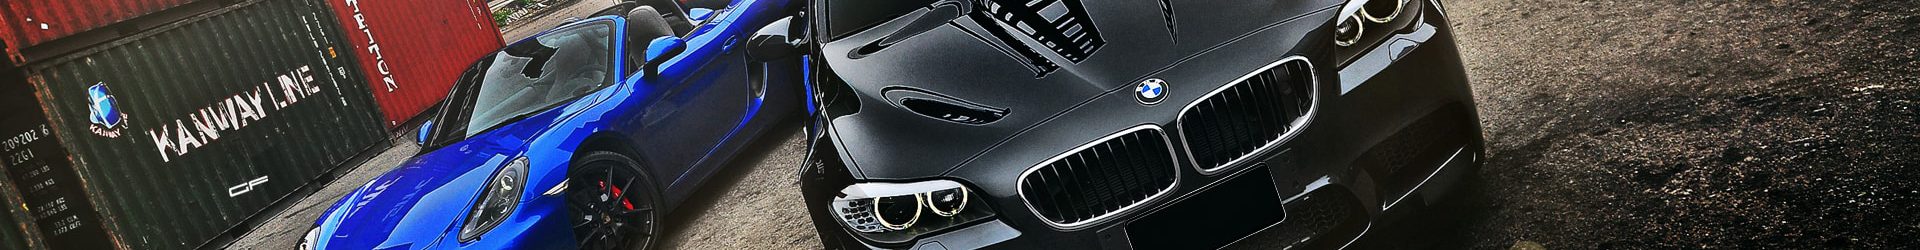 限時猛獸 – C63s Coupe AMG Edition 1 霸氣出浴小記 By 吉他腳 GuitarFeet